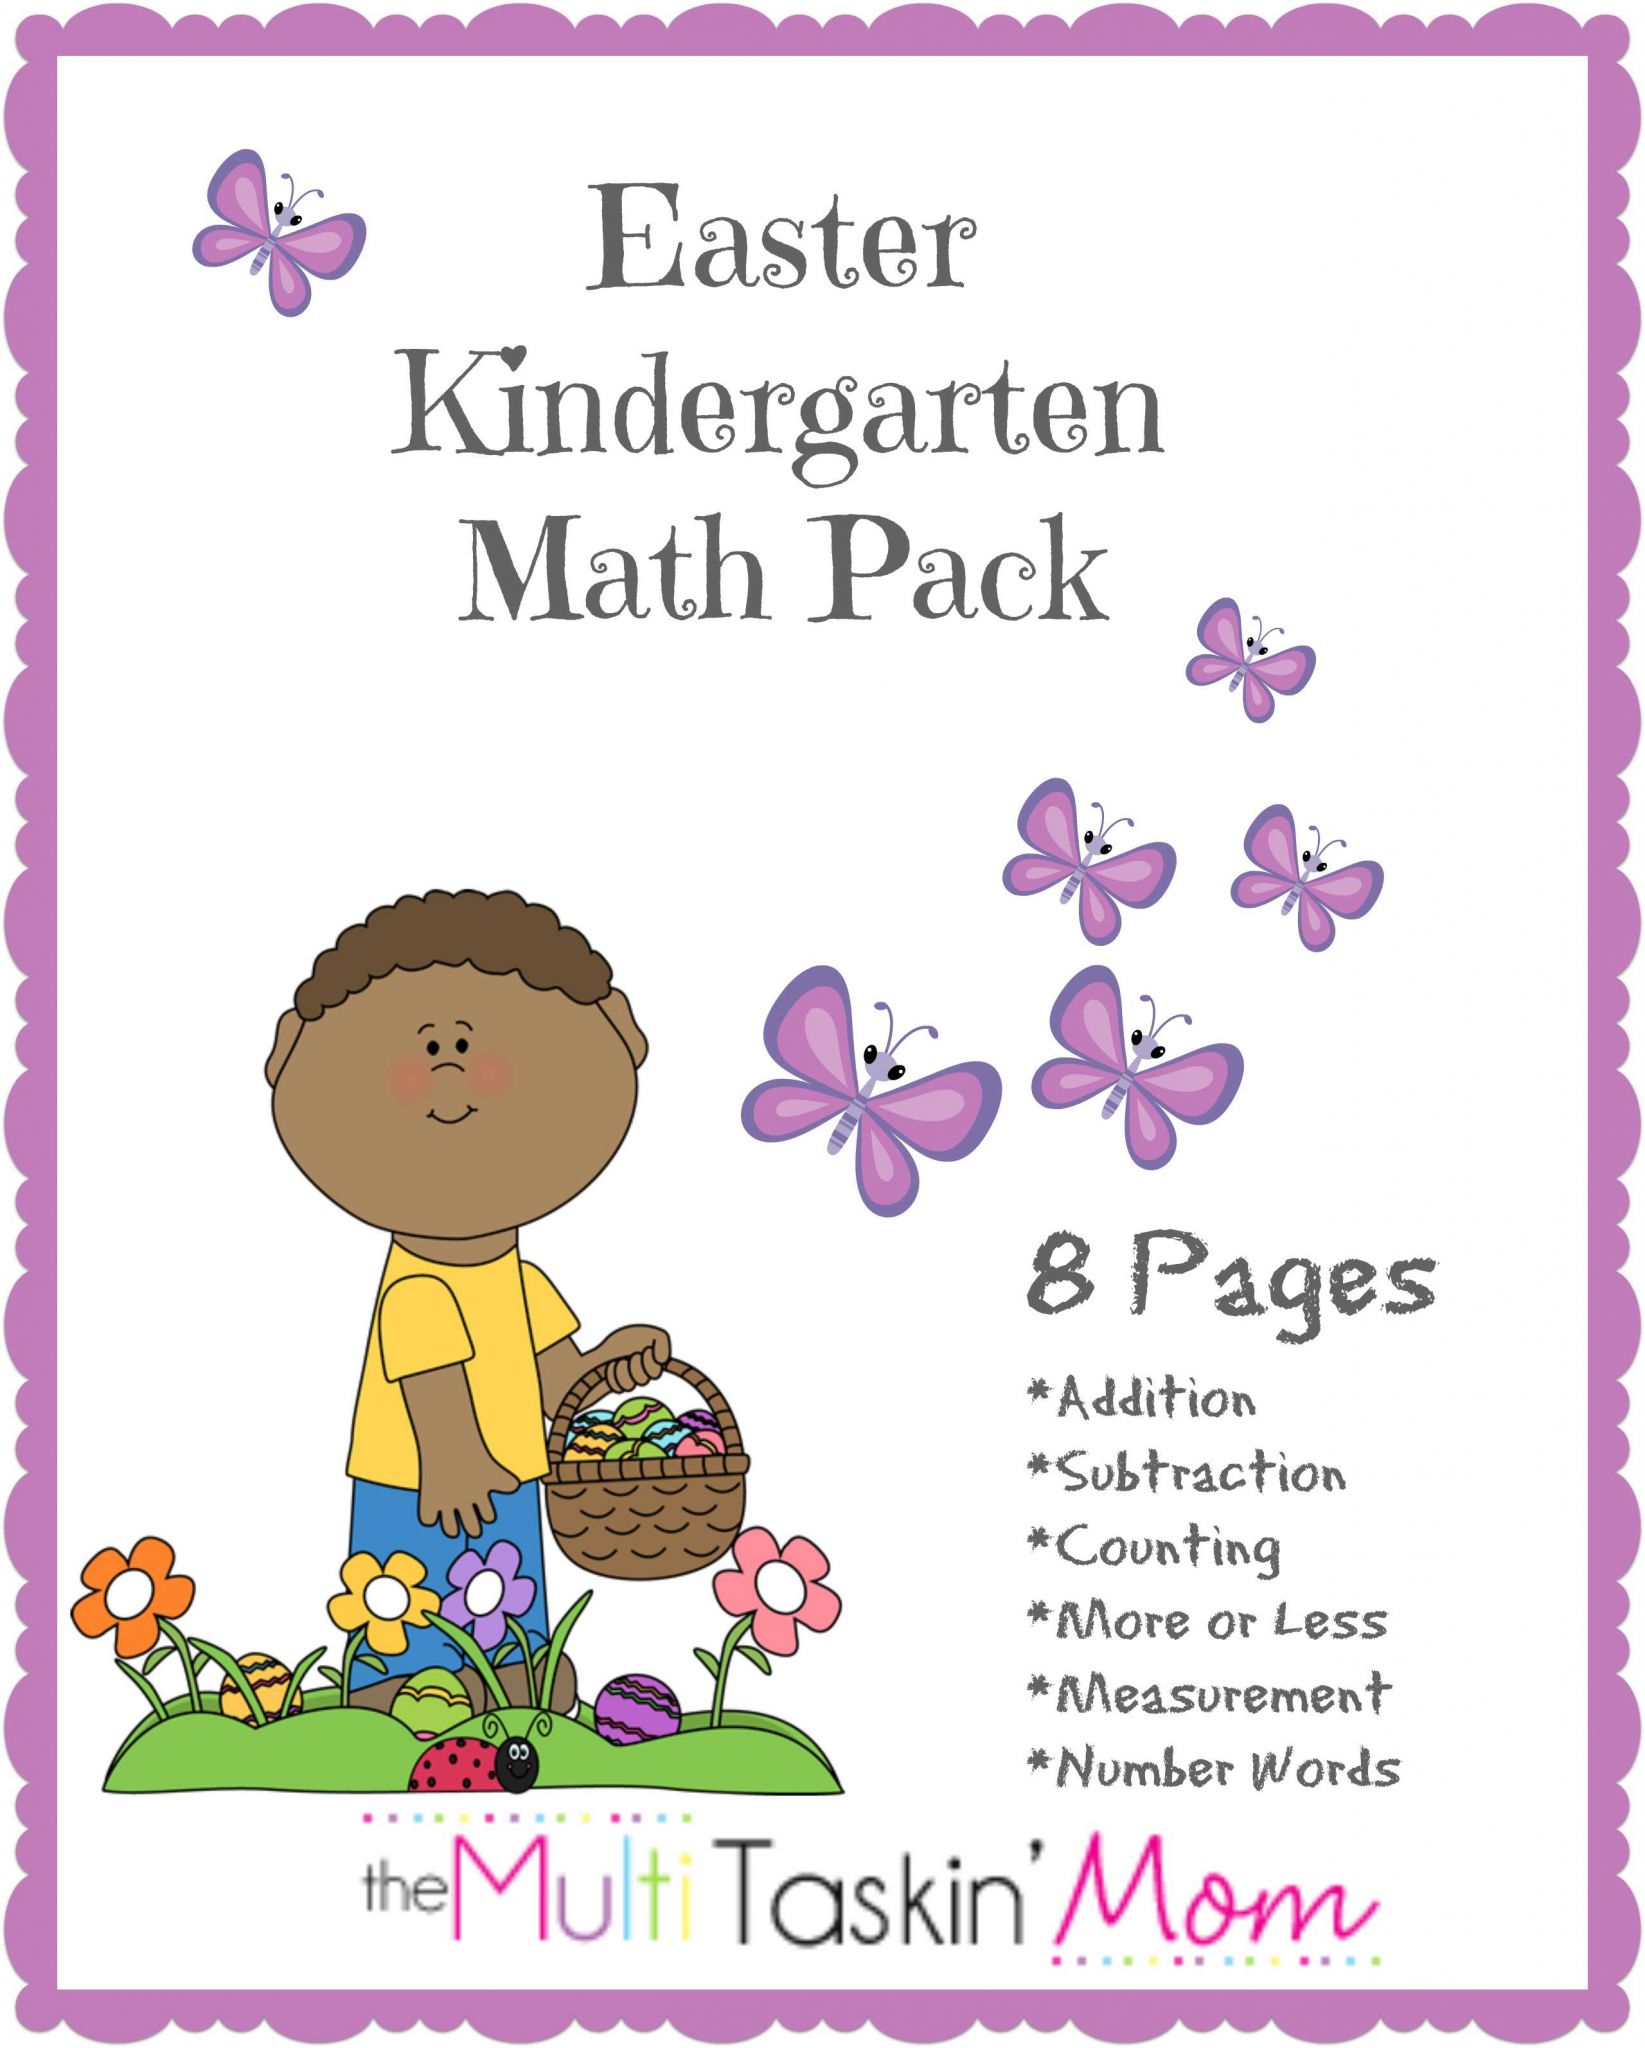 Fidget Spinner Worksheets Free Also Worksheets for Preschool Easter